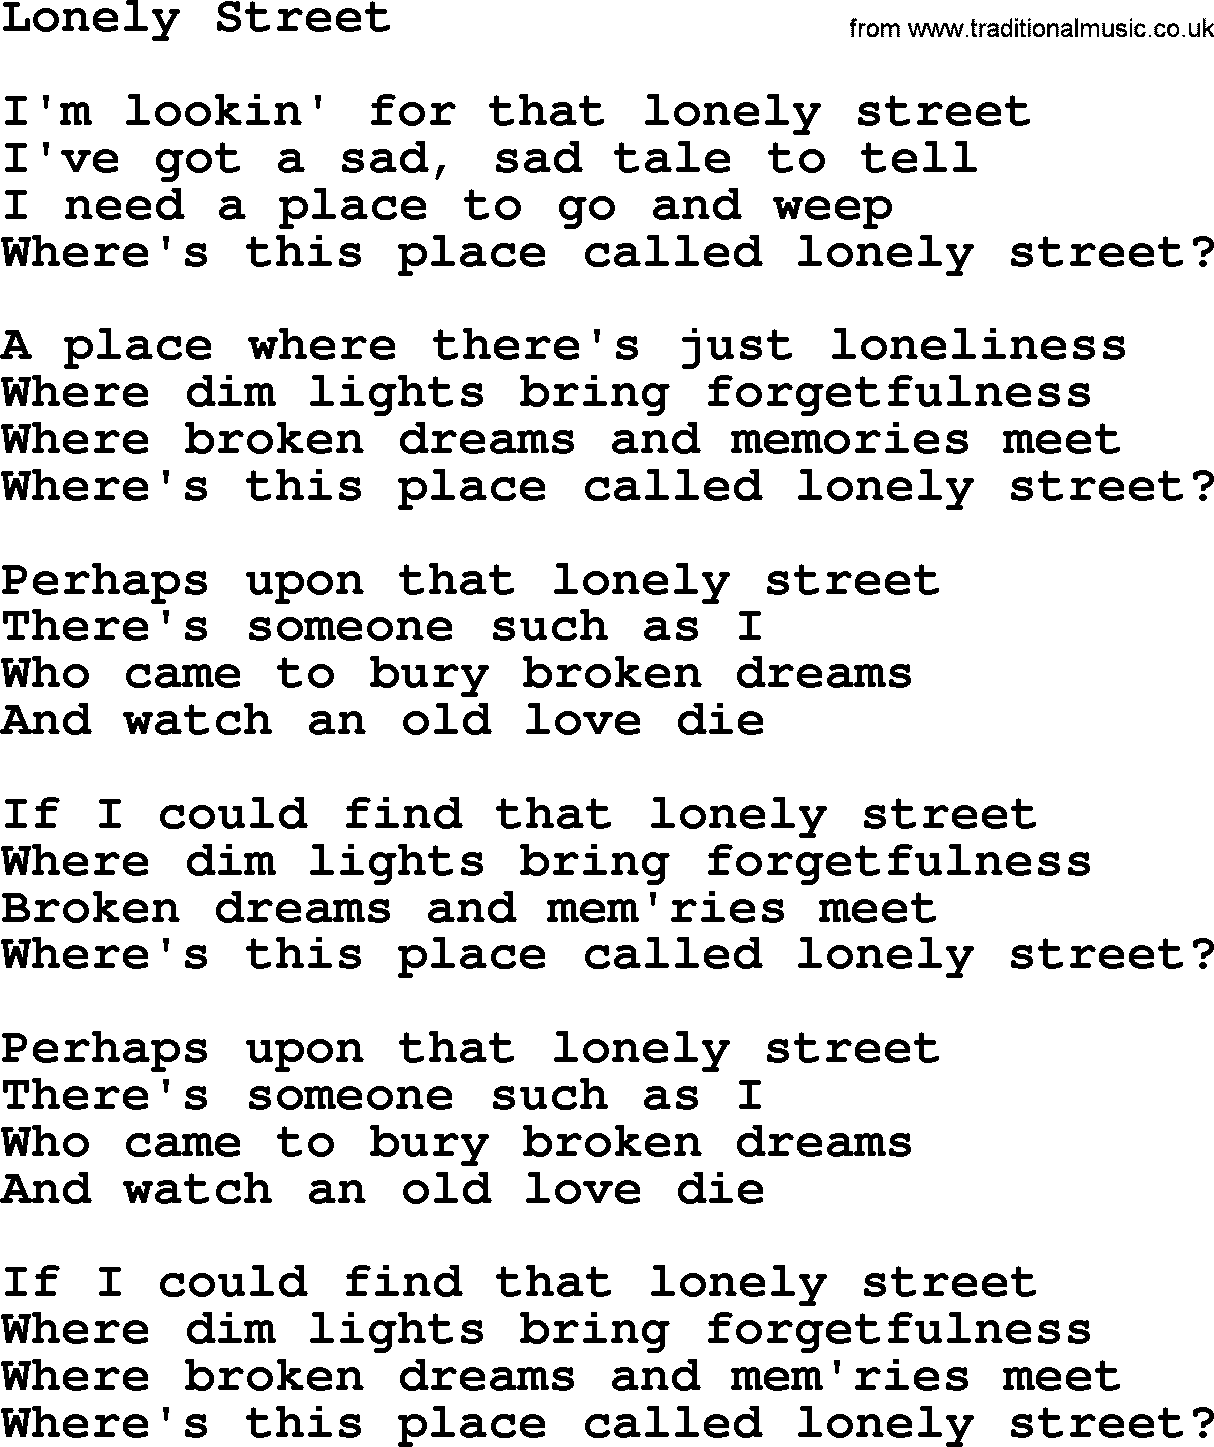 Willie Nelson song: Lonely Street lyrics